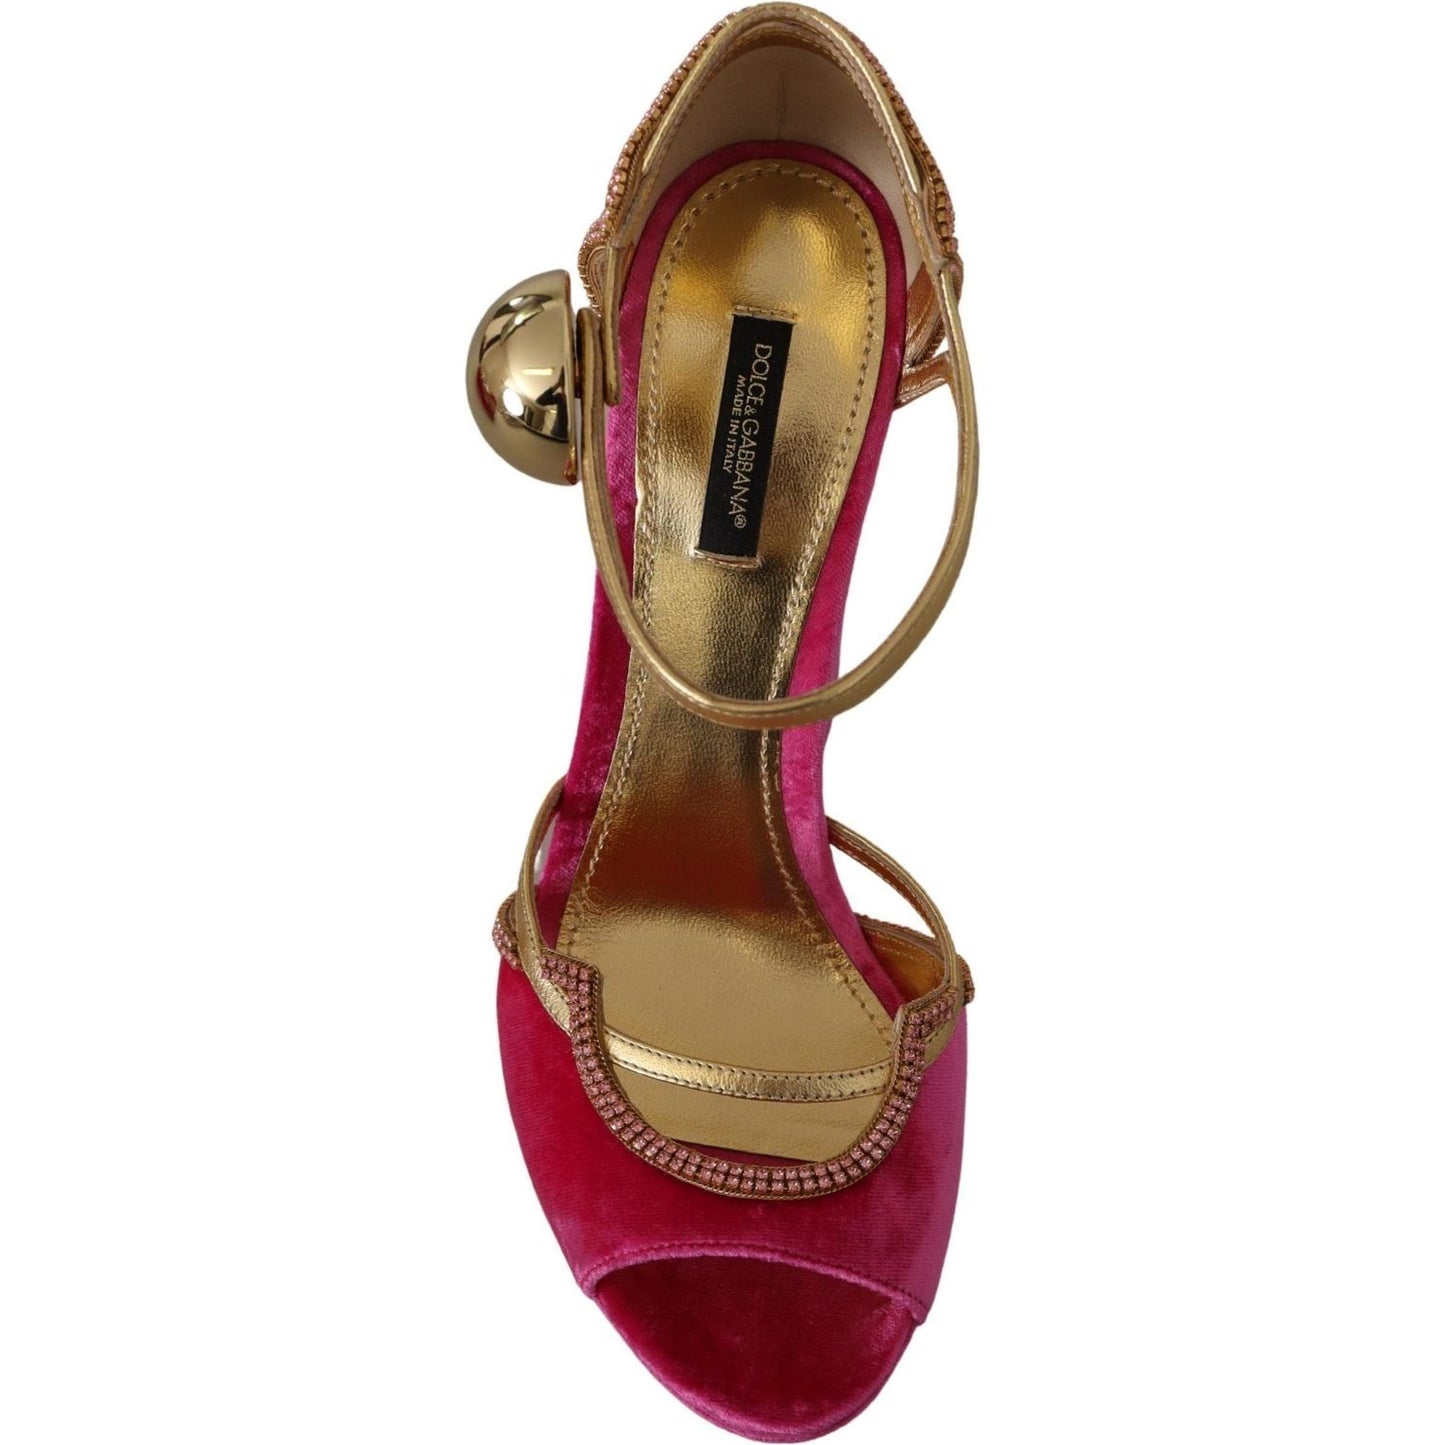 Dolce & Gabbana Ethereal Pink Velvet Crystal Sandals pink-velvet-crystal-ankle-strap-sandals-shoes IMG_0270-scaled-31ca0d9d-508.jpg